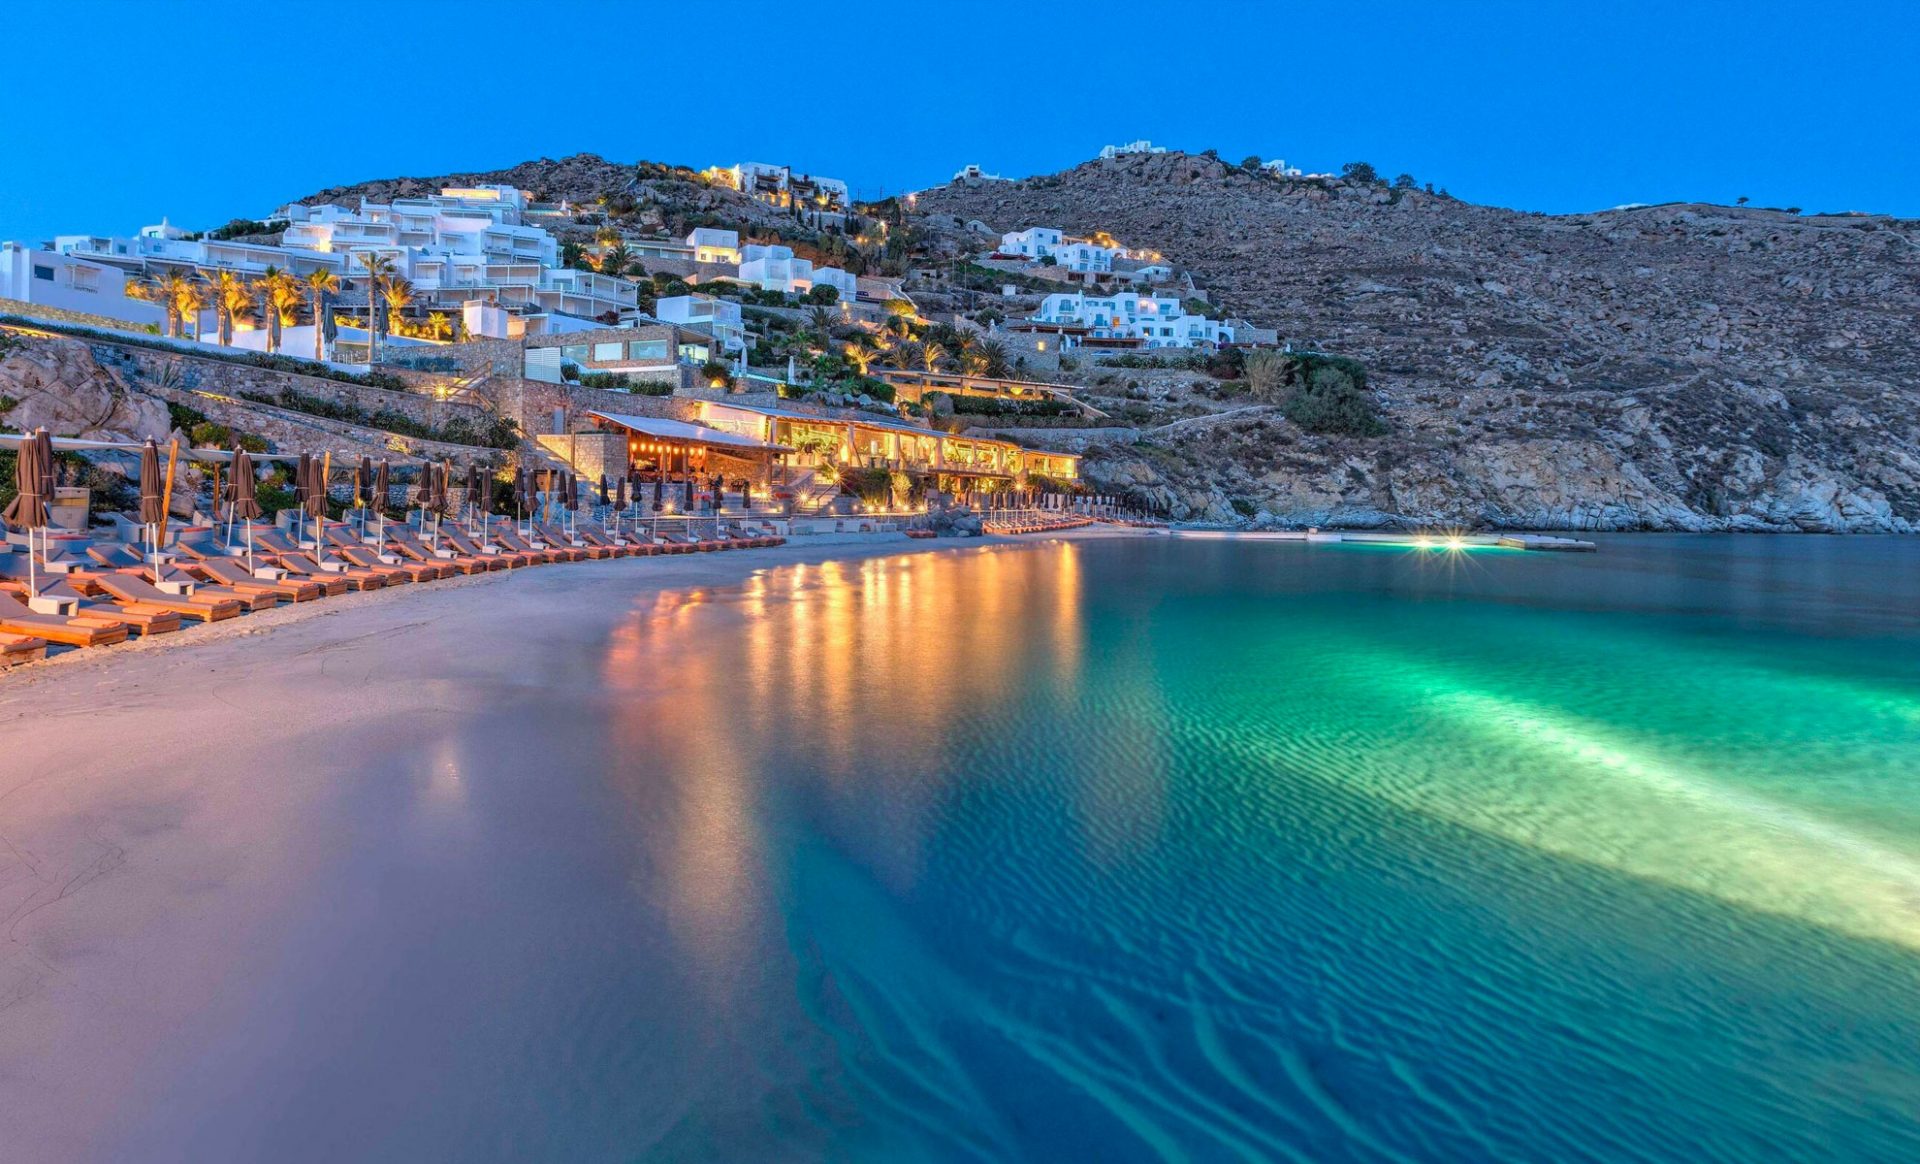 Santa Marina Resort, Mykonos | Luxury Greece Holiday | All Inclusive